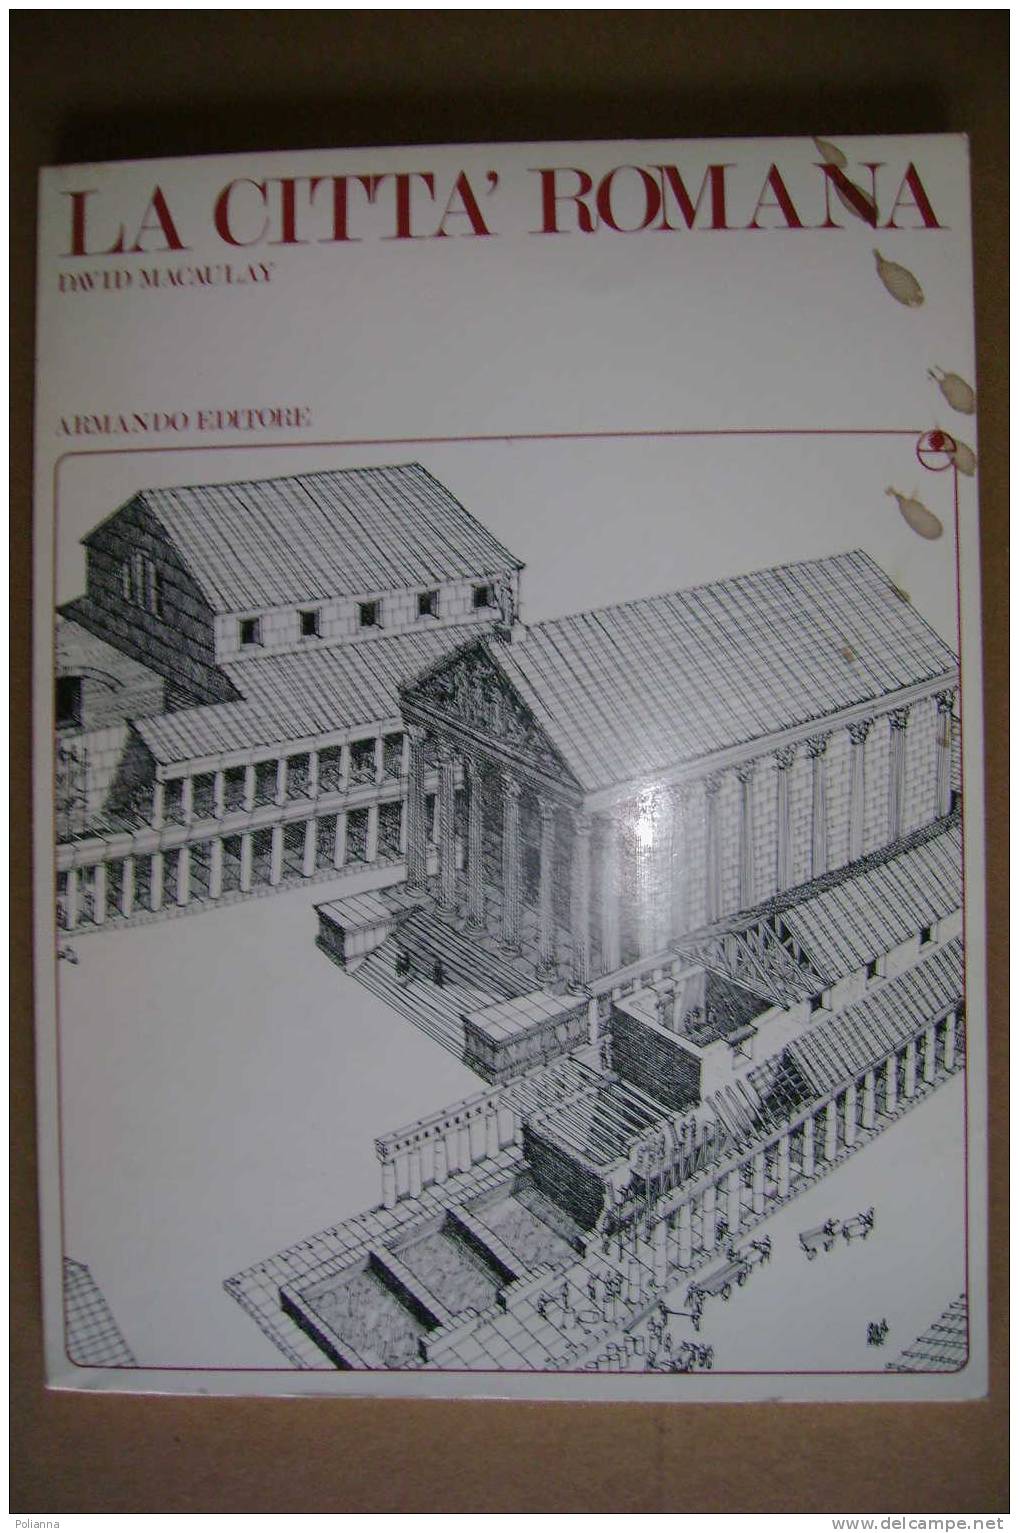 PAM/51  David Macaulay LA CITTA´ ROMANA Armando Editore 1976/storia-archeologia-architettura - Arte, Architettura